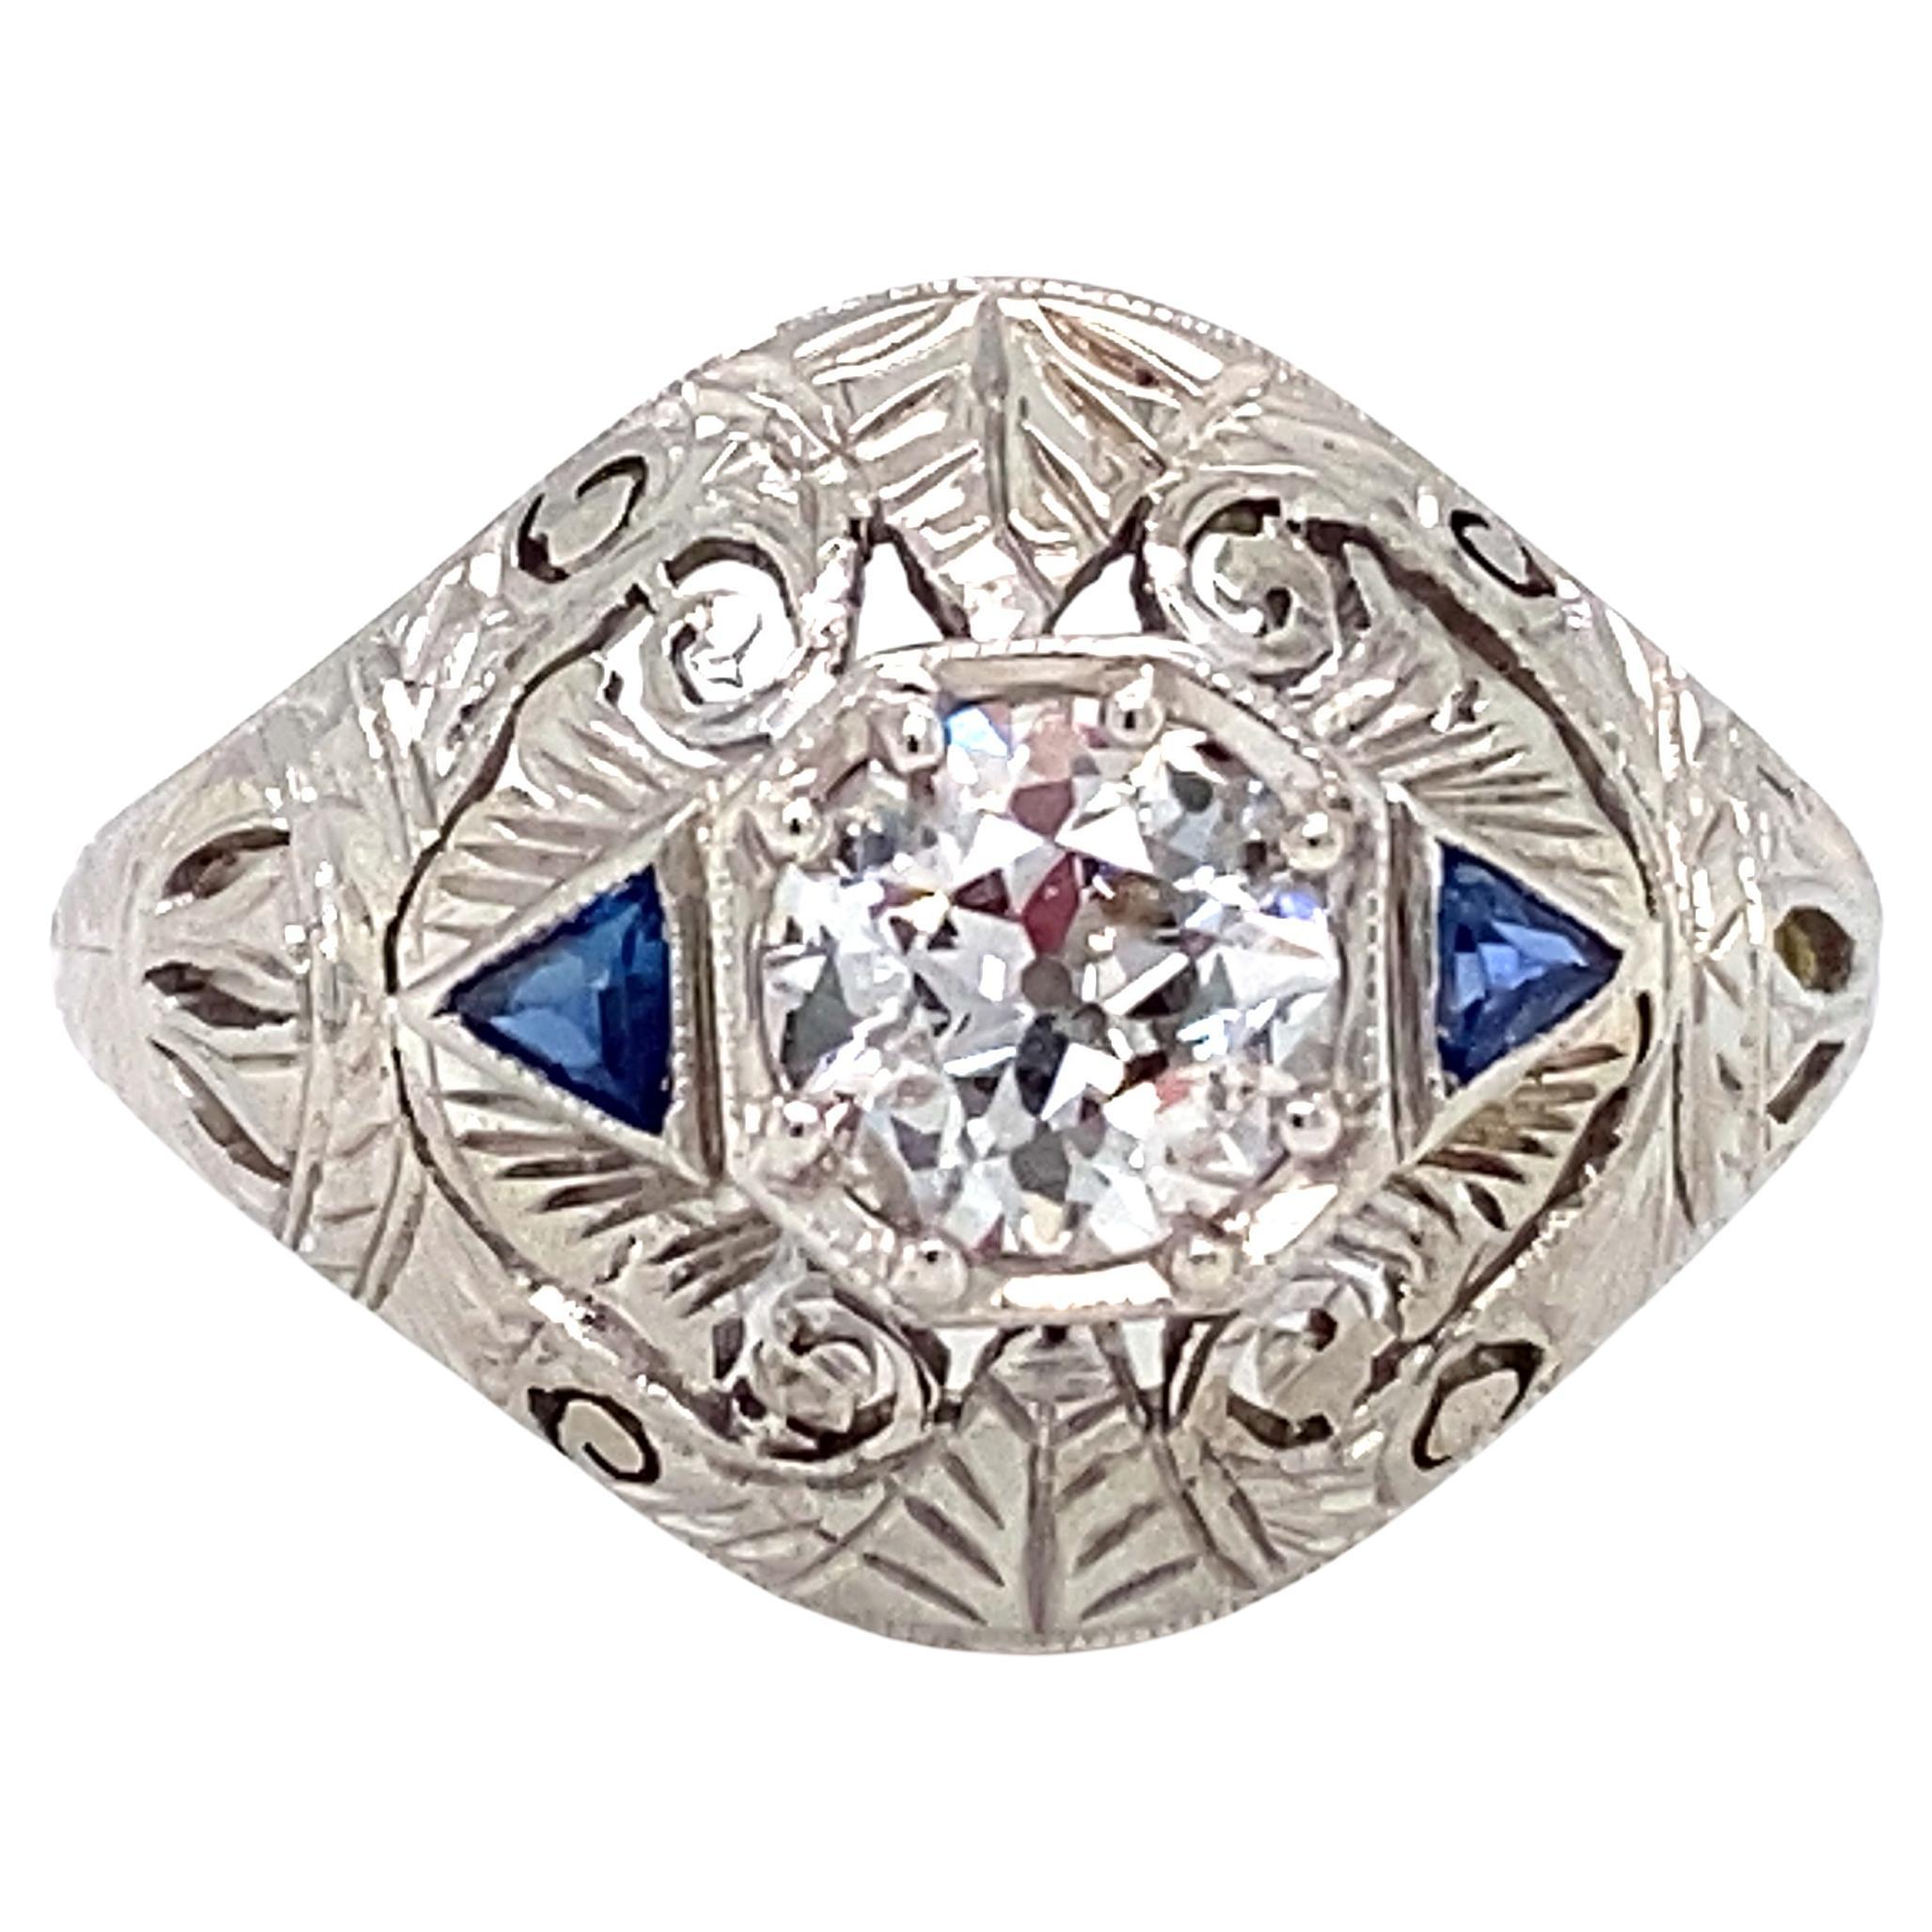 Circa 1920s Art Deco 0.65 Carat Diamond and Sapphire Ring in Platinum For Sale